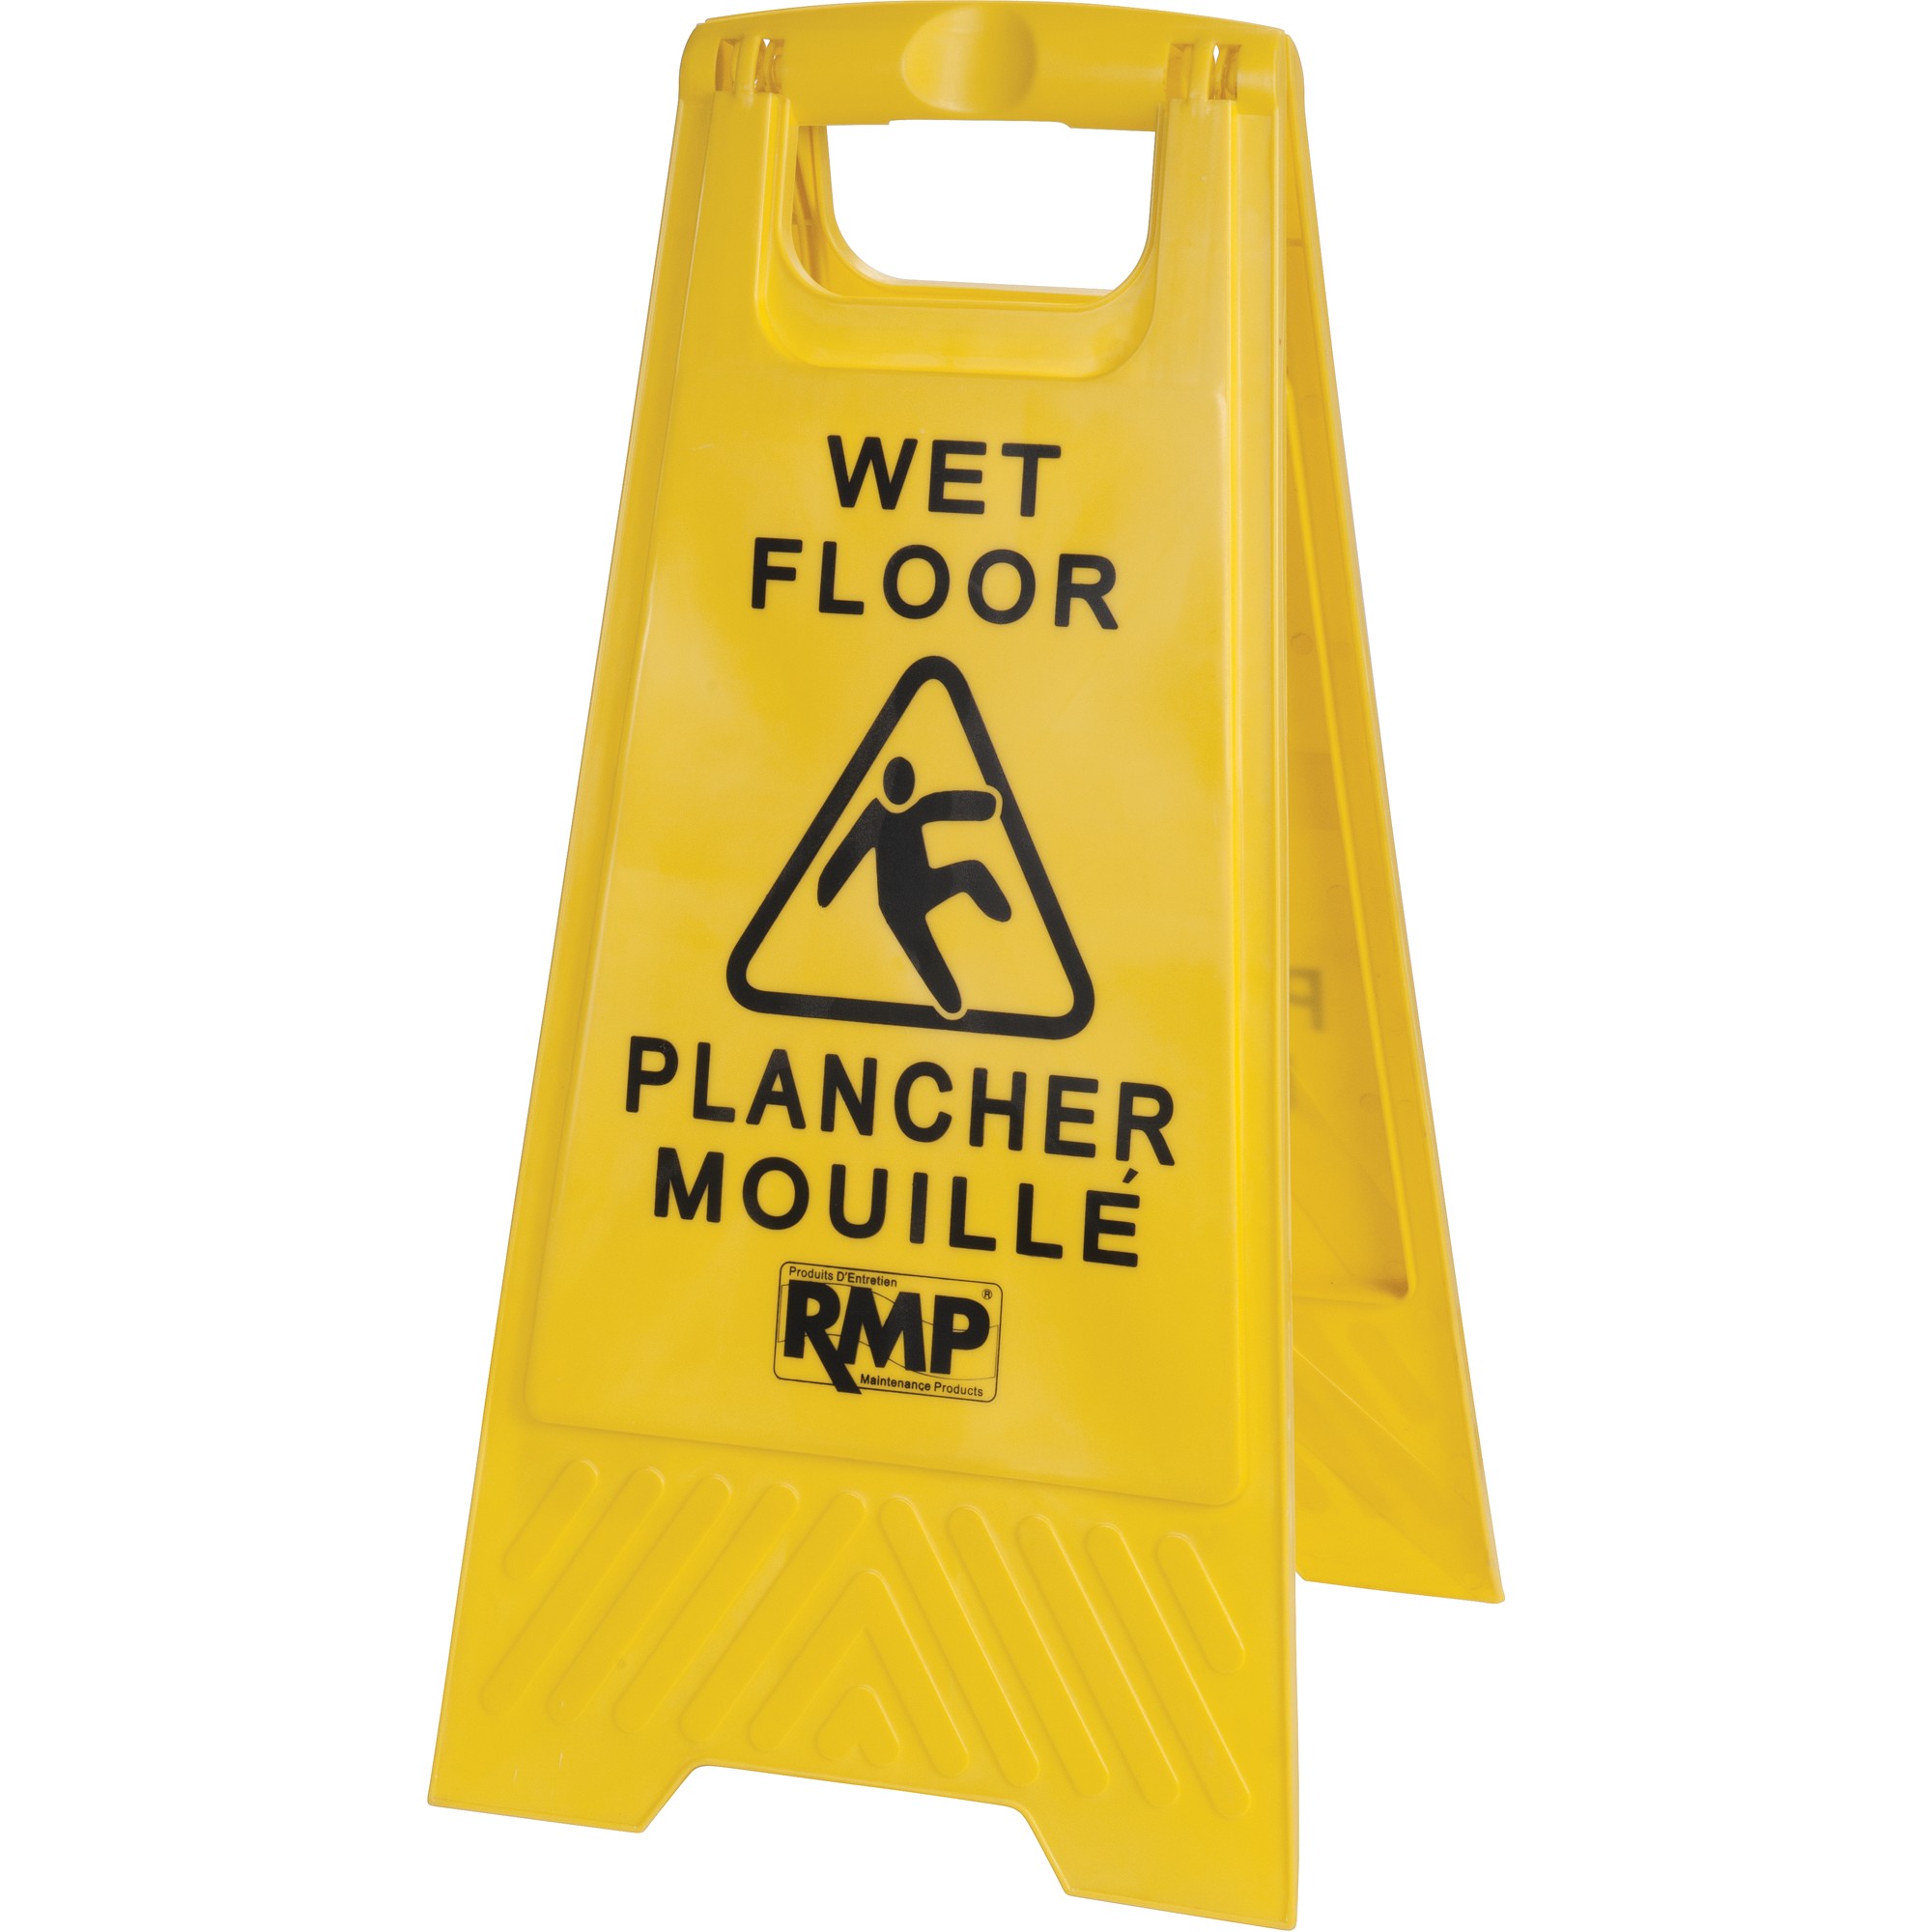 caution-wet-floor-signs-ubicaciondepersonas-cdmx-gob-mx